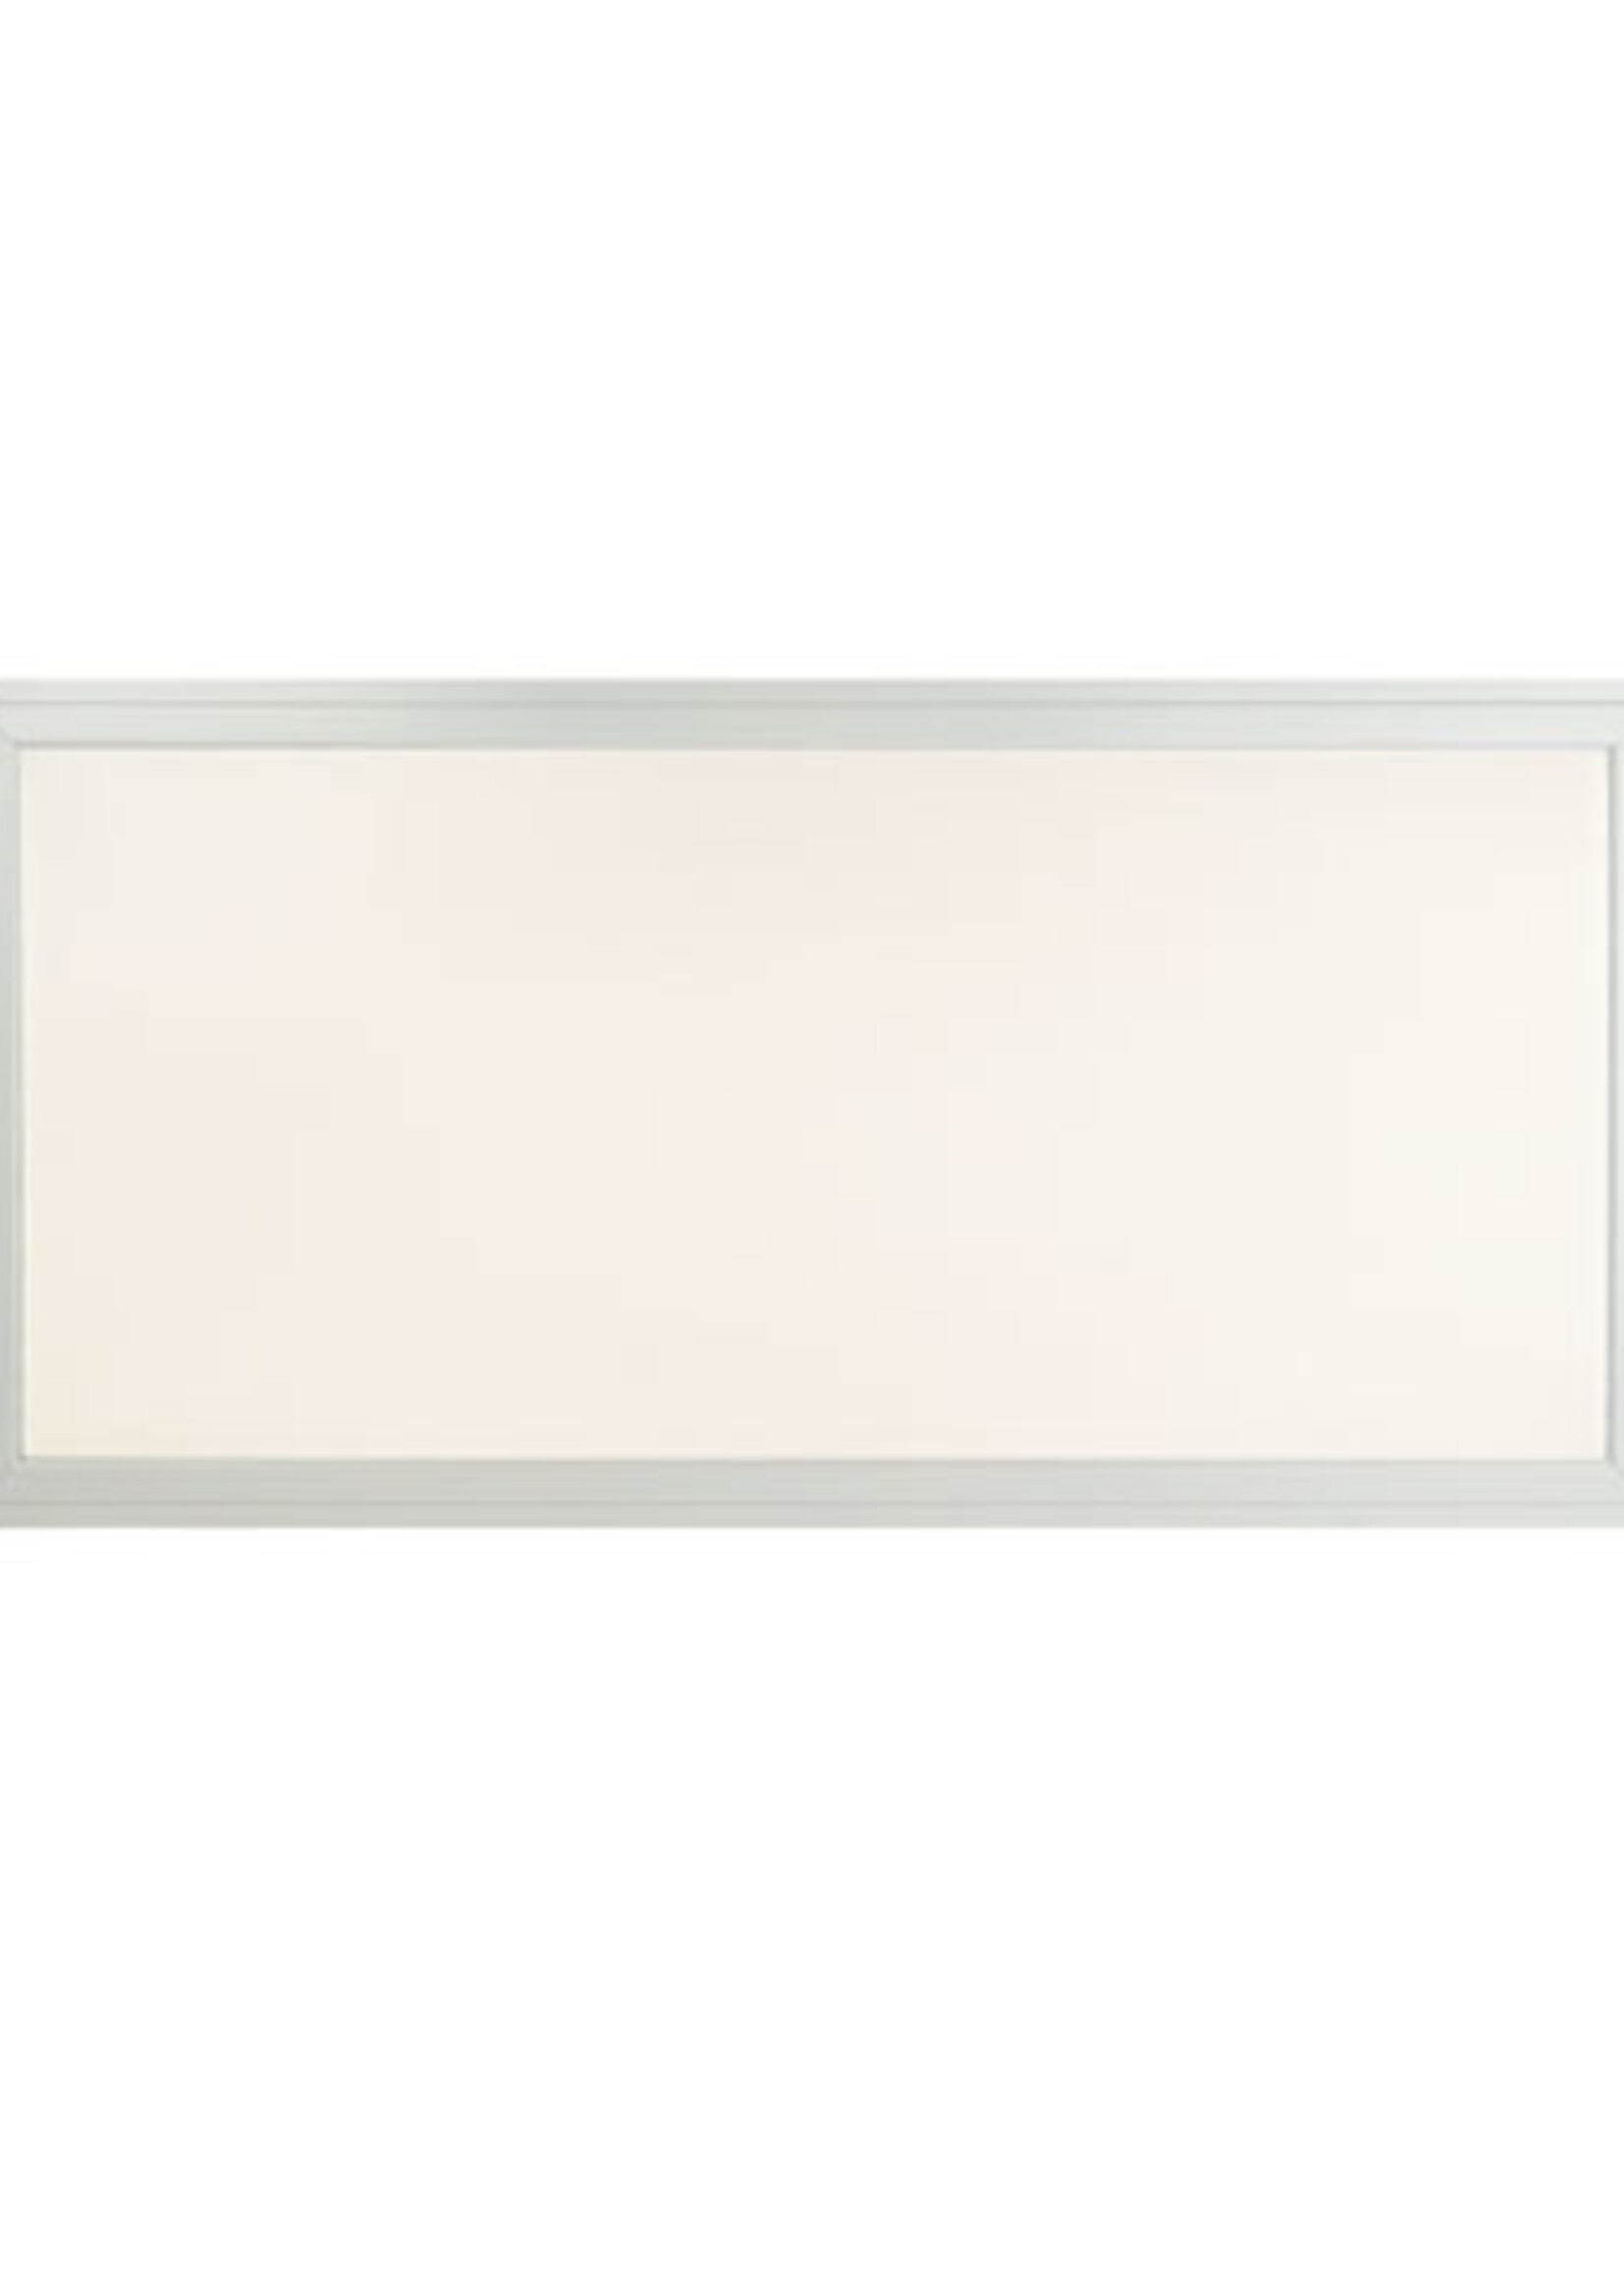 LED Panel 60x120cm 60W 120lm/W High lumen Edge-lit